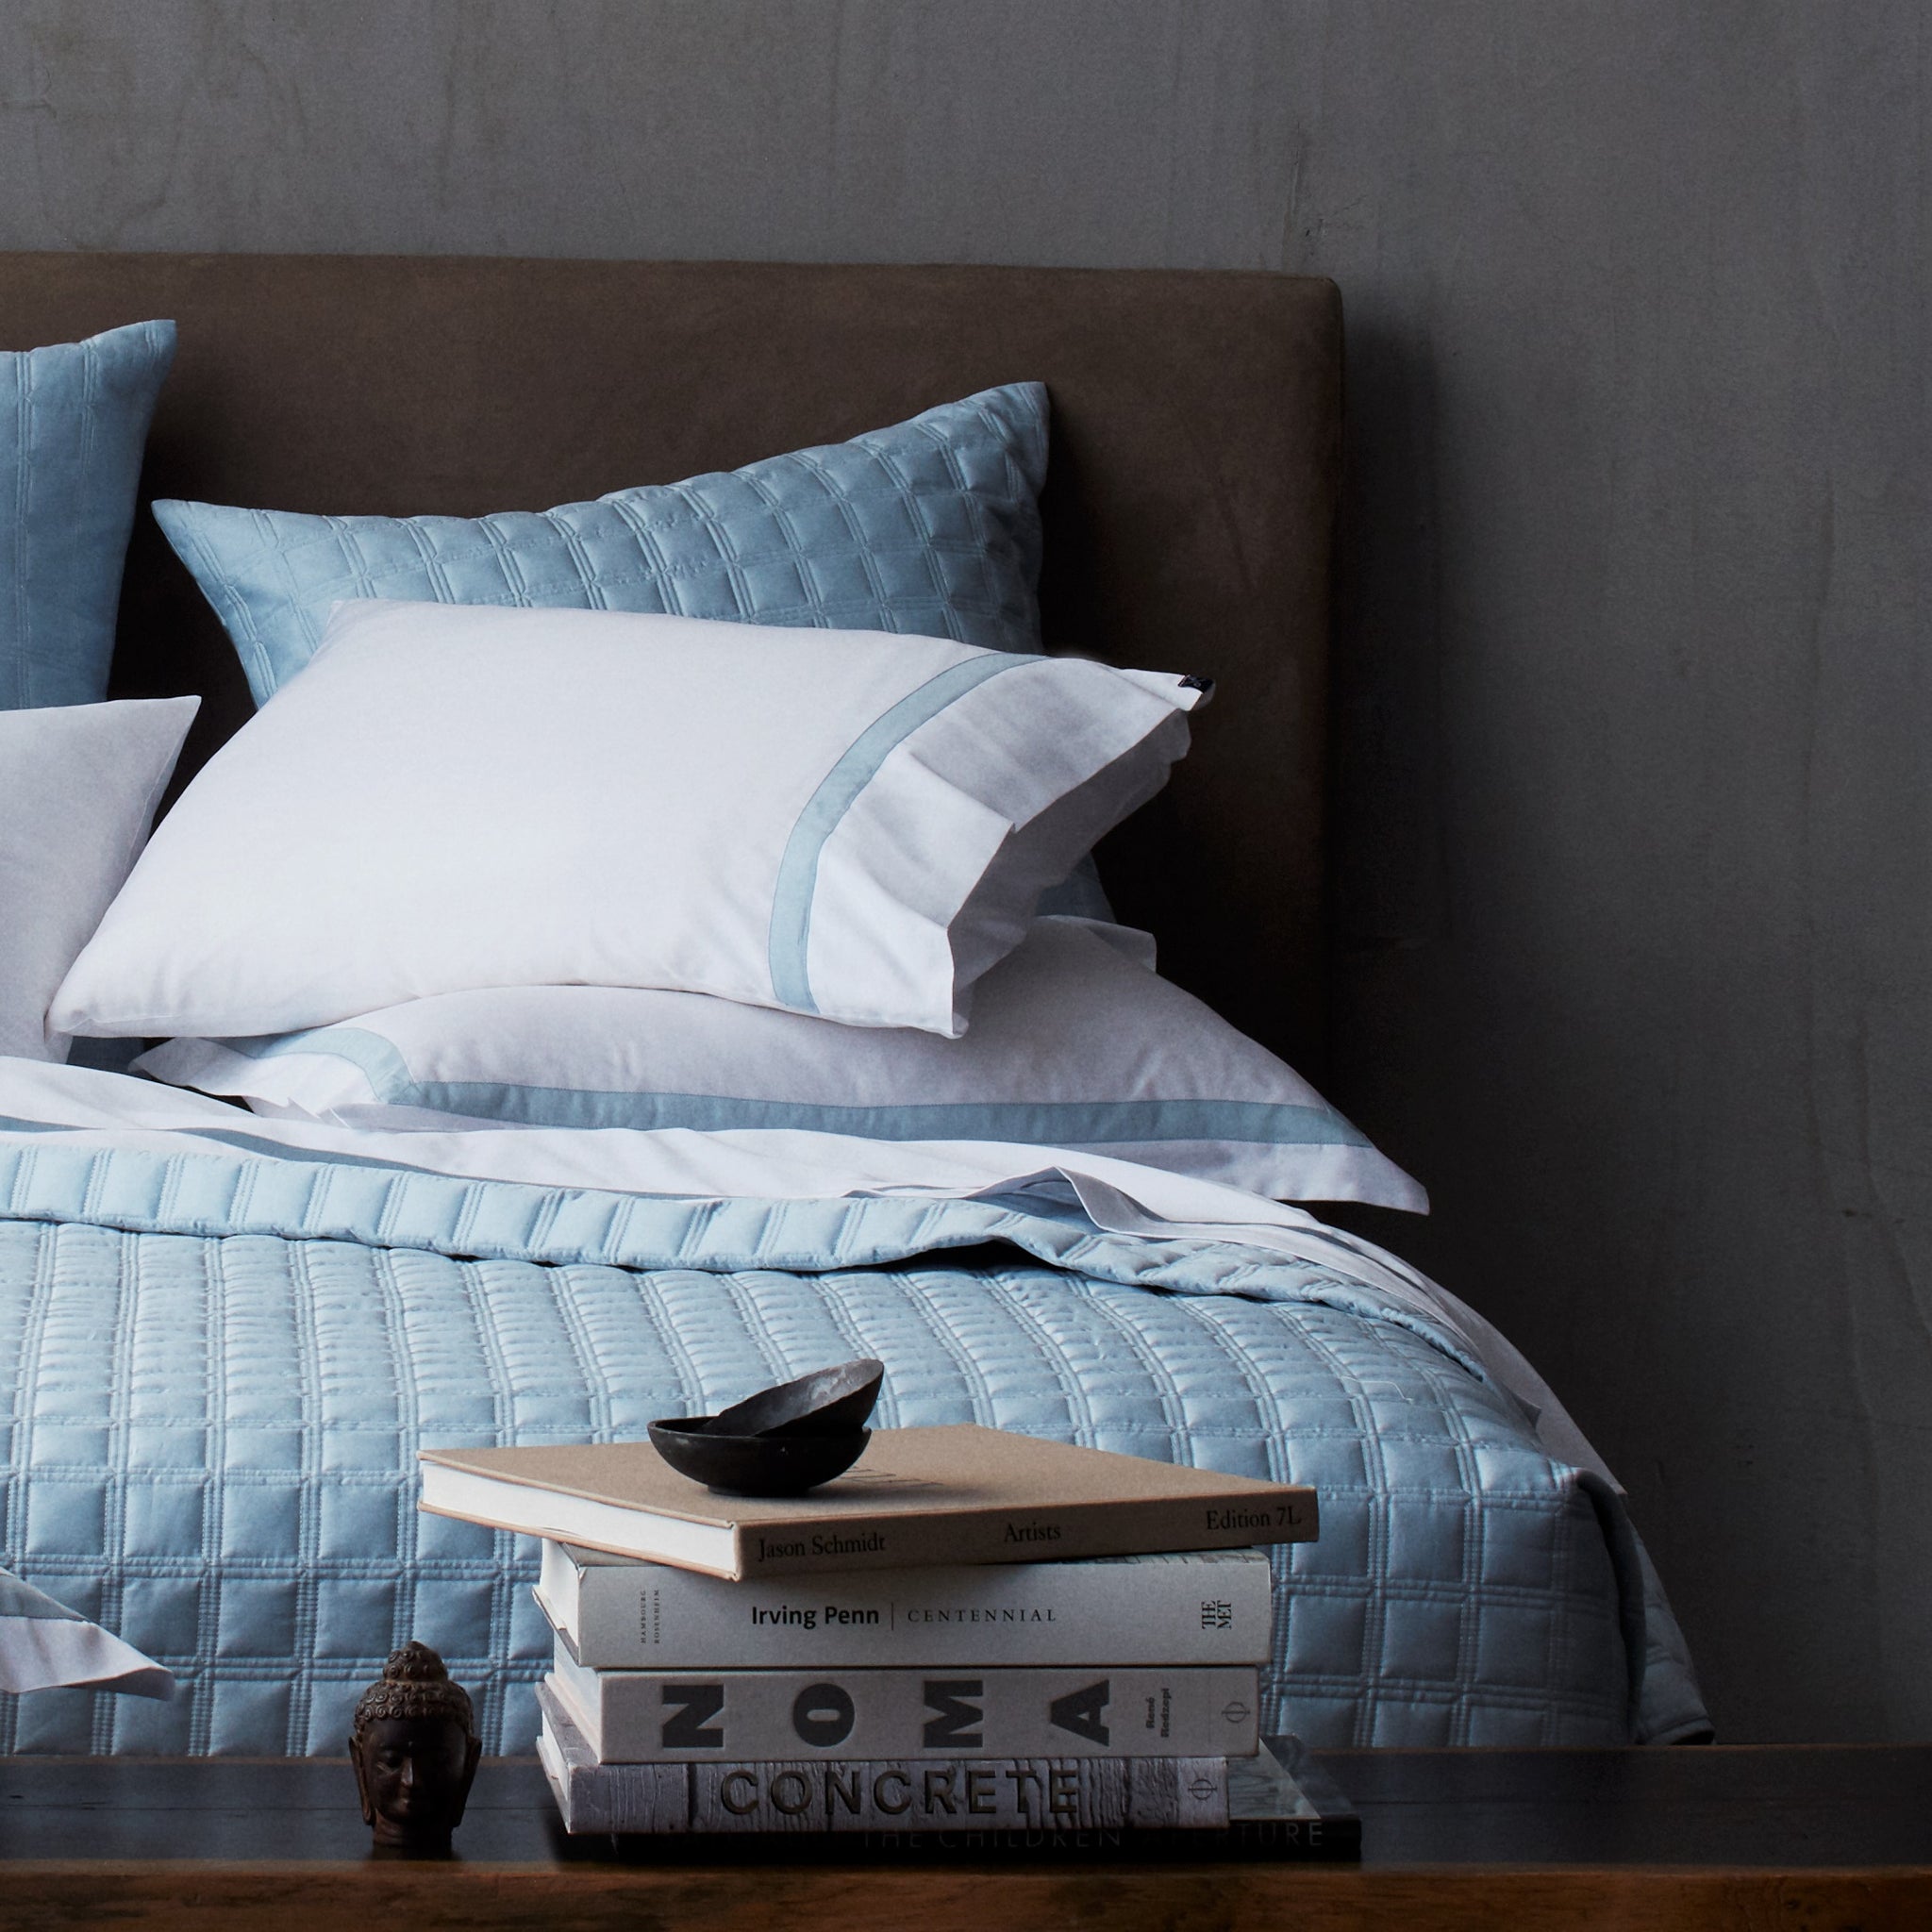 ethiek Sinewi Kostbaar Luxury Bed Sheets, Fairly Priced | The Mercer by 10 Grove